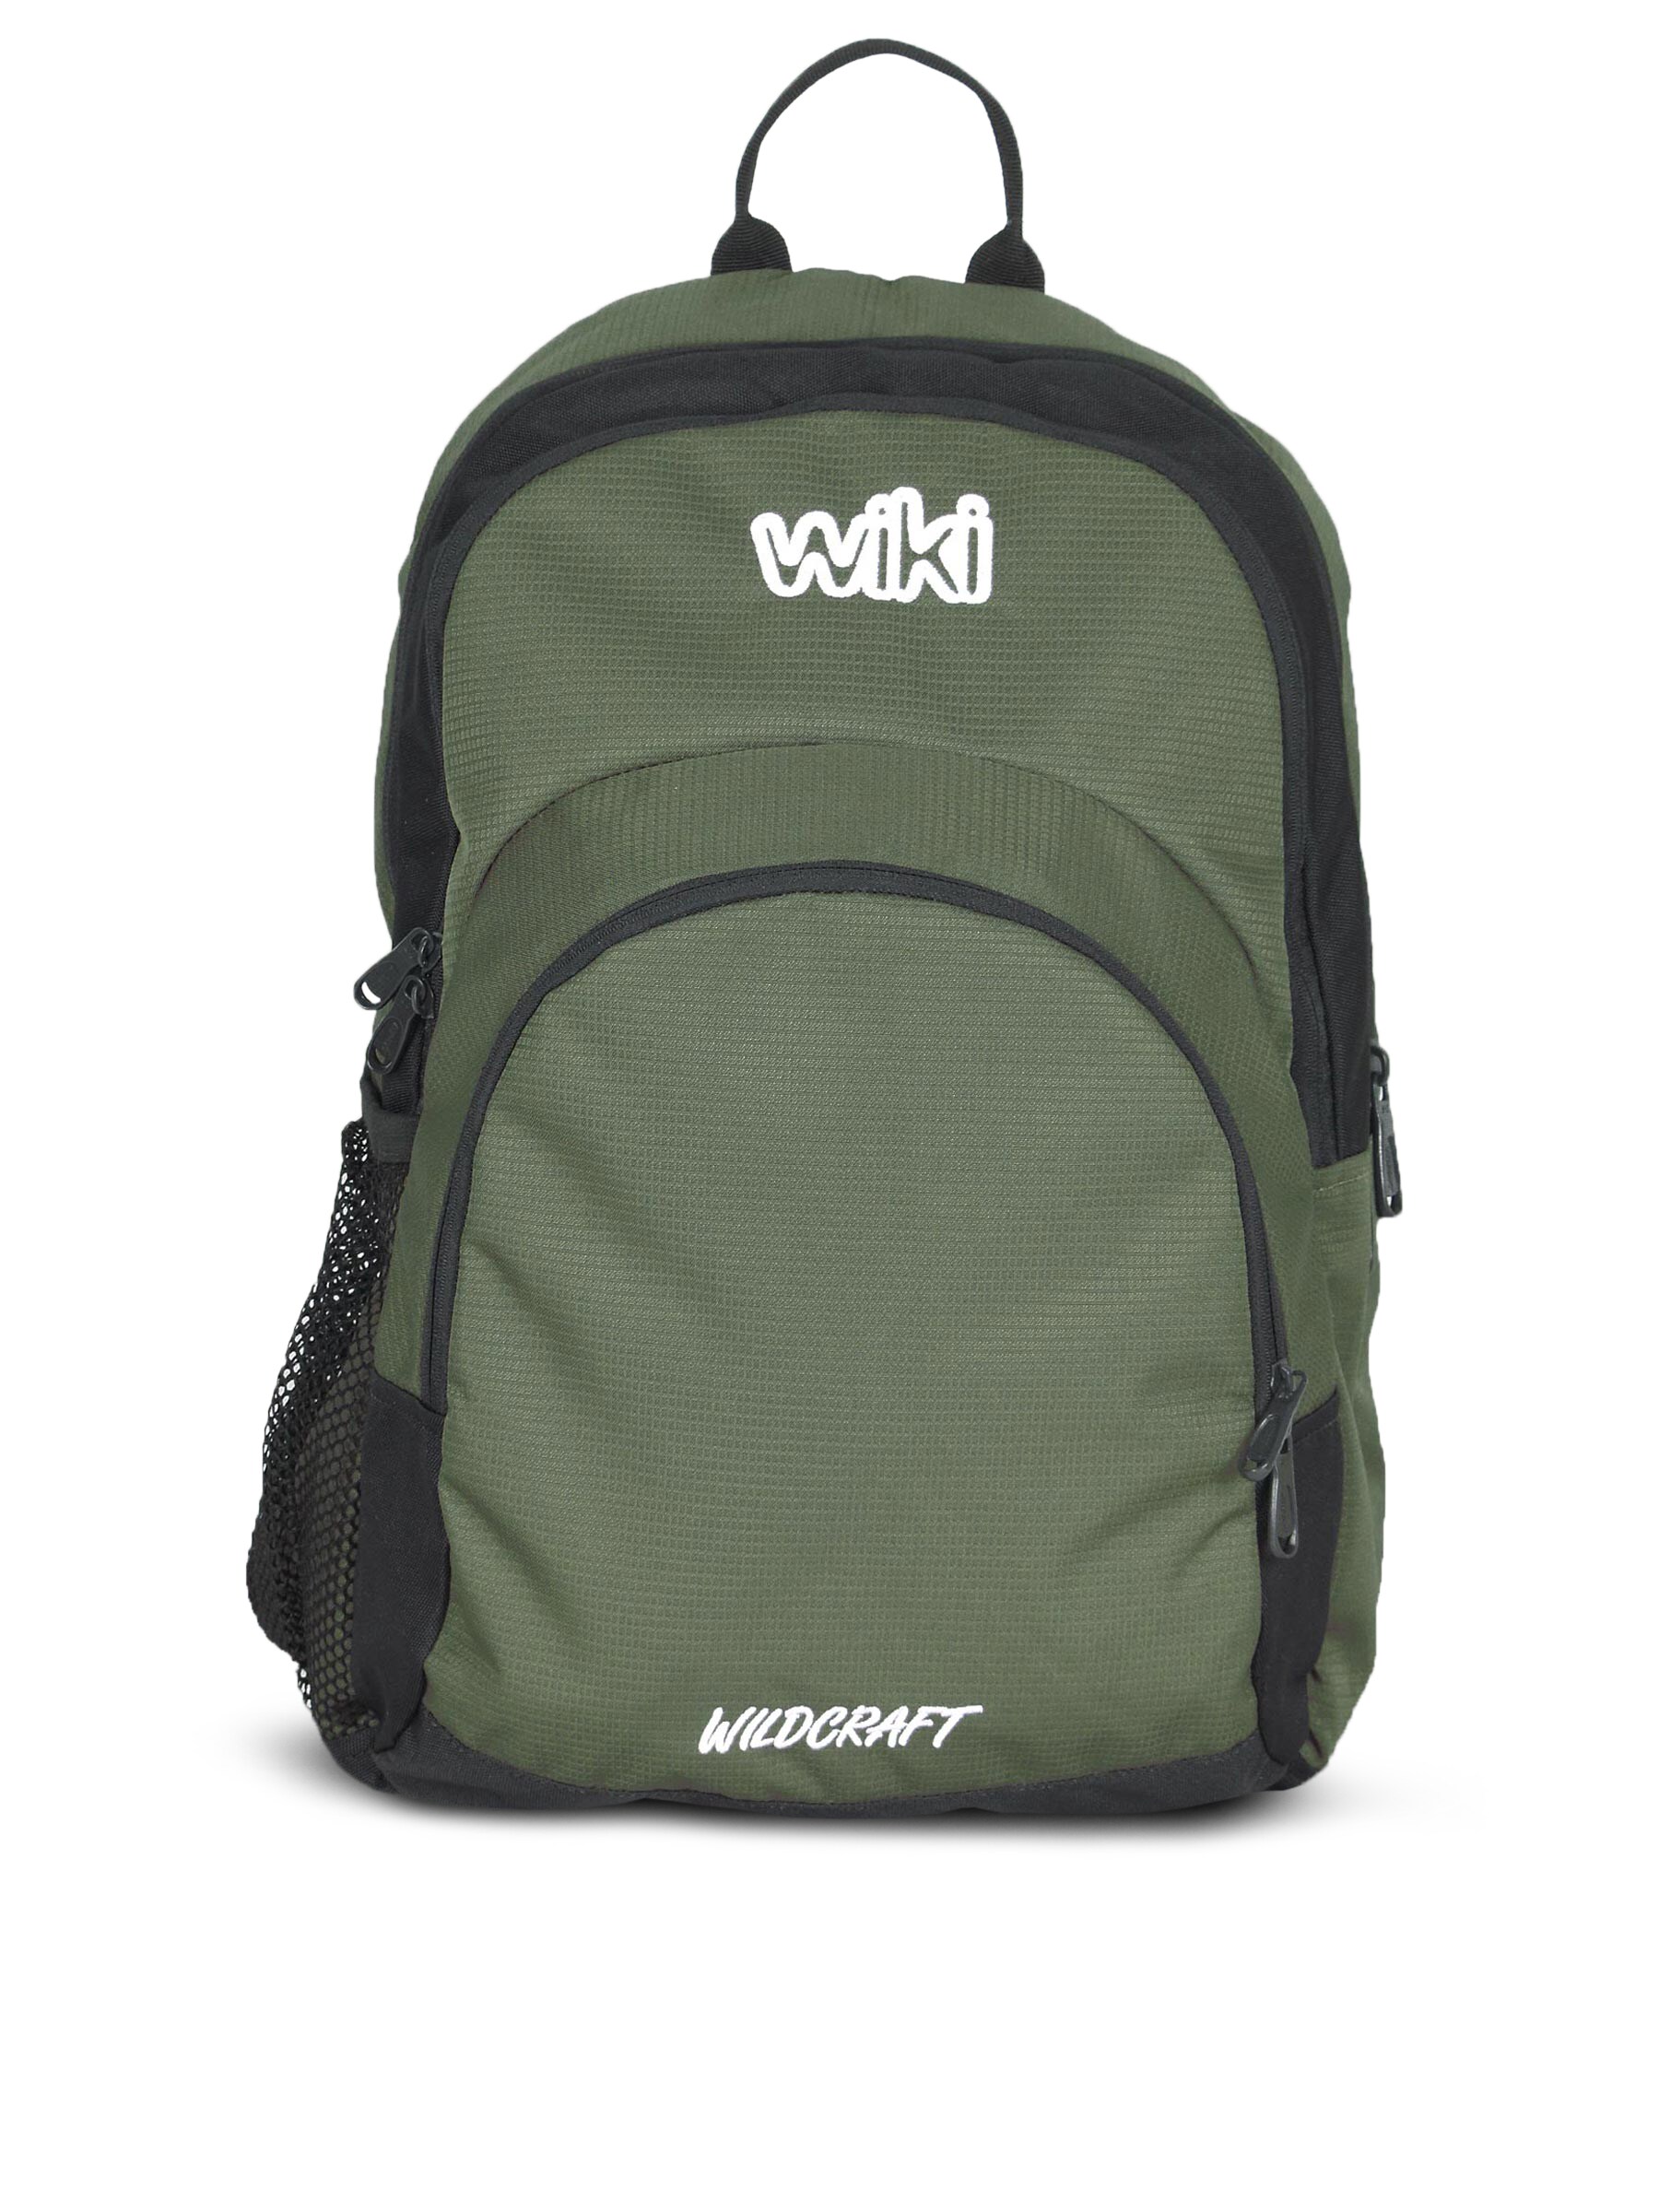 Wildcraft Unisex Olive Green Backpack